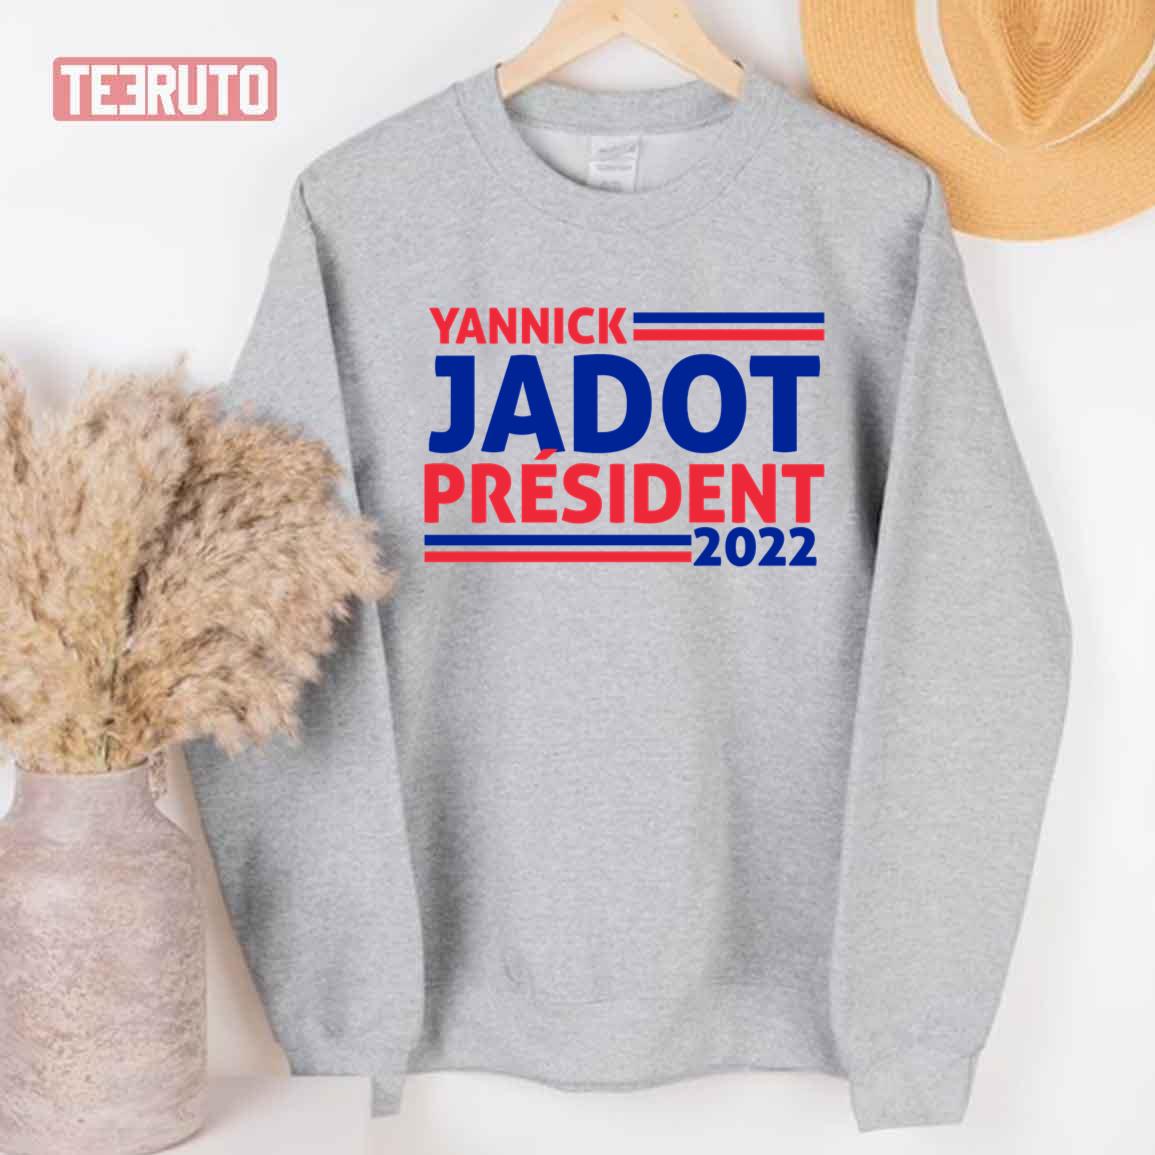 Yannick Jadot Presidential Elections 2022 France Unisex T-Shirt